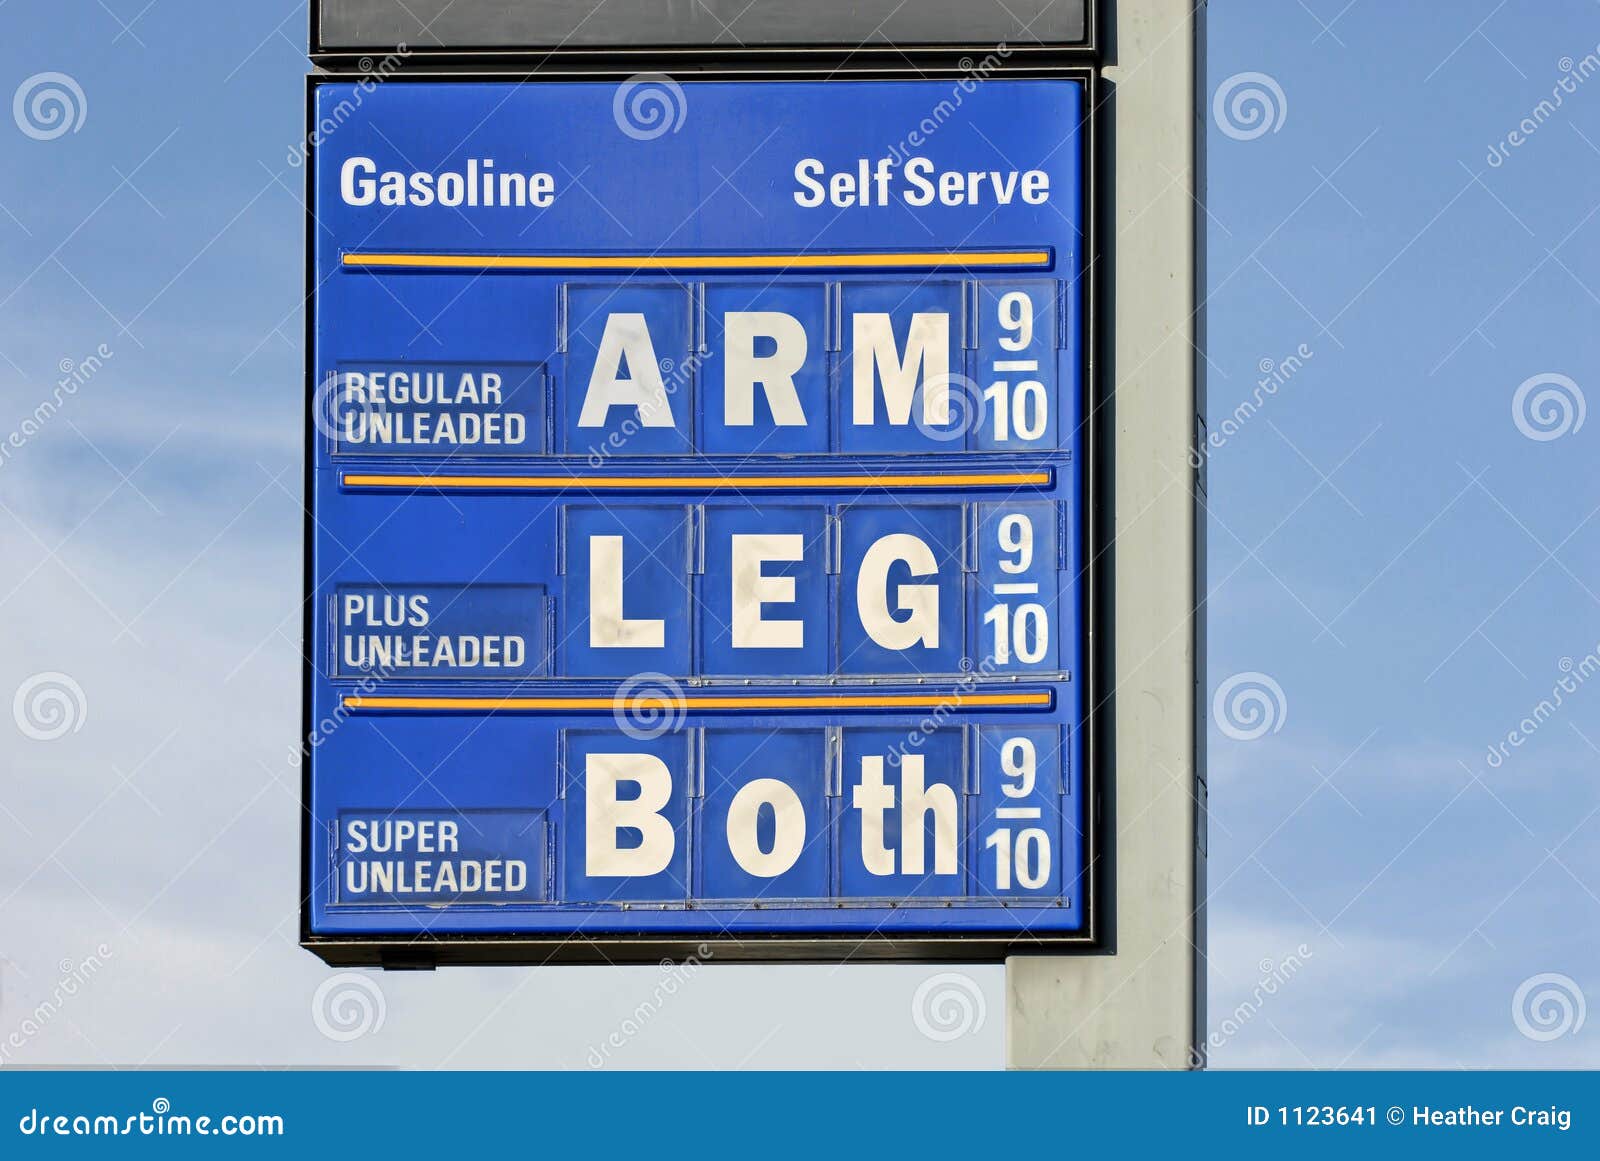 gas price humor